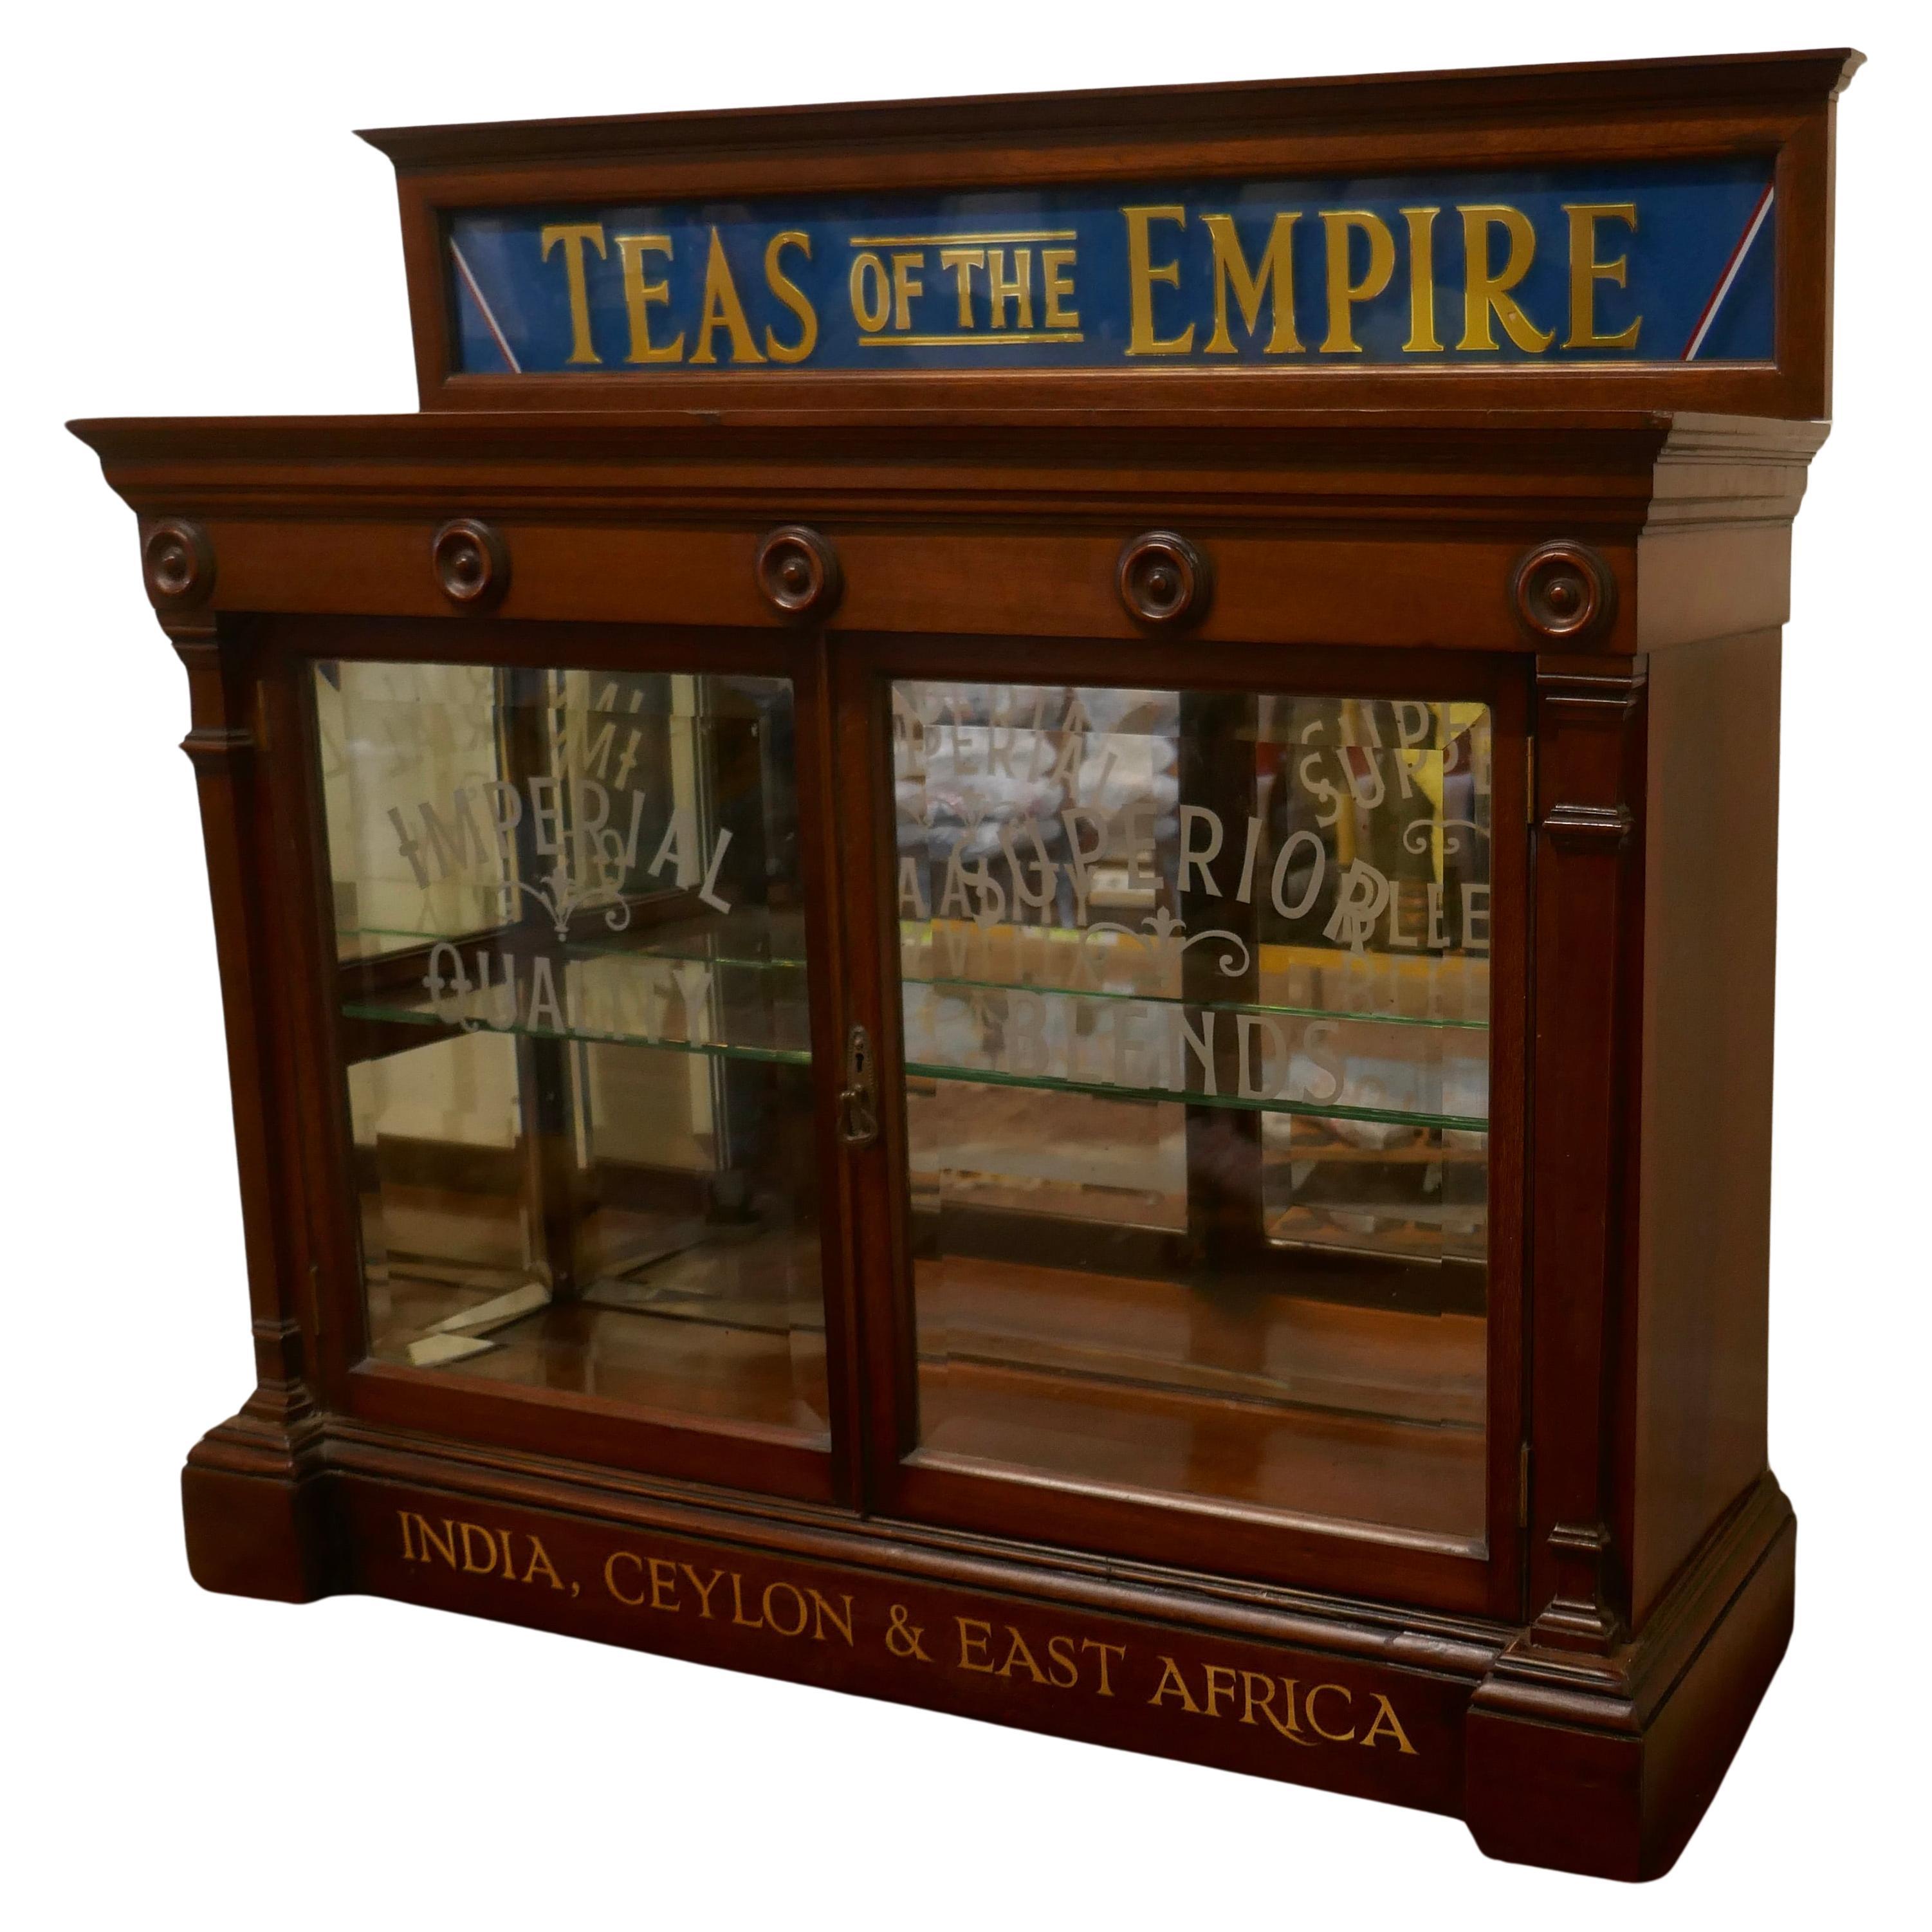  Victorian Empire Tea Cabinet, Tea Room, Cafe Display  A magnificent piece  For Sale